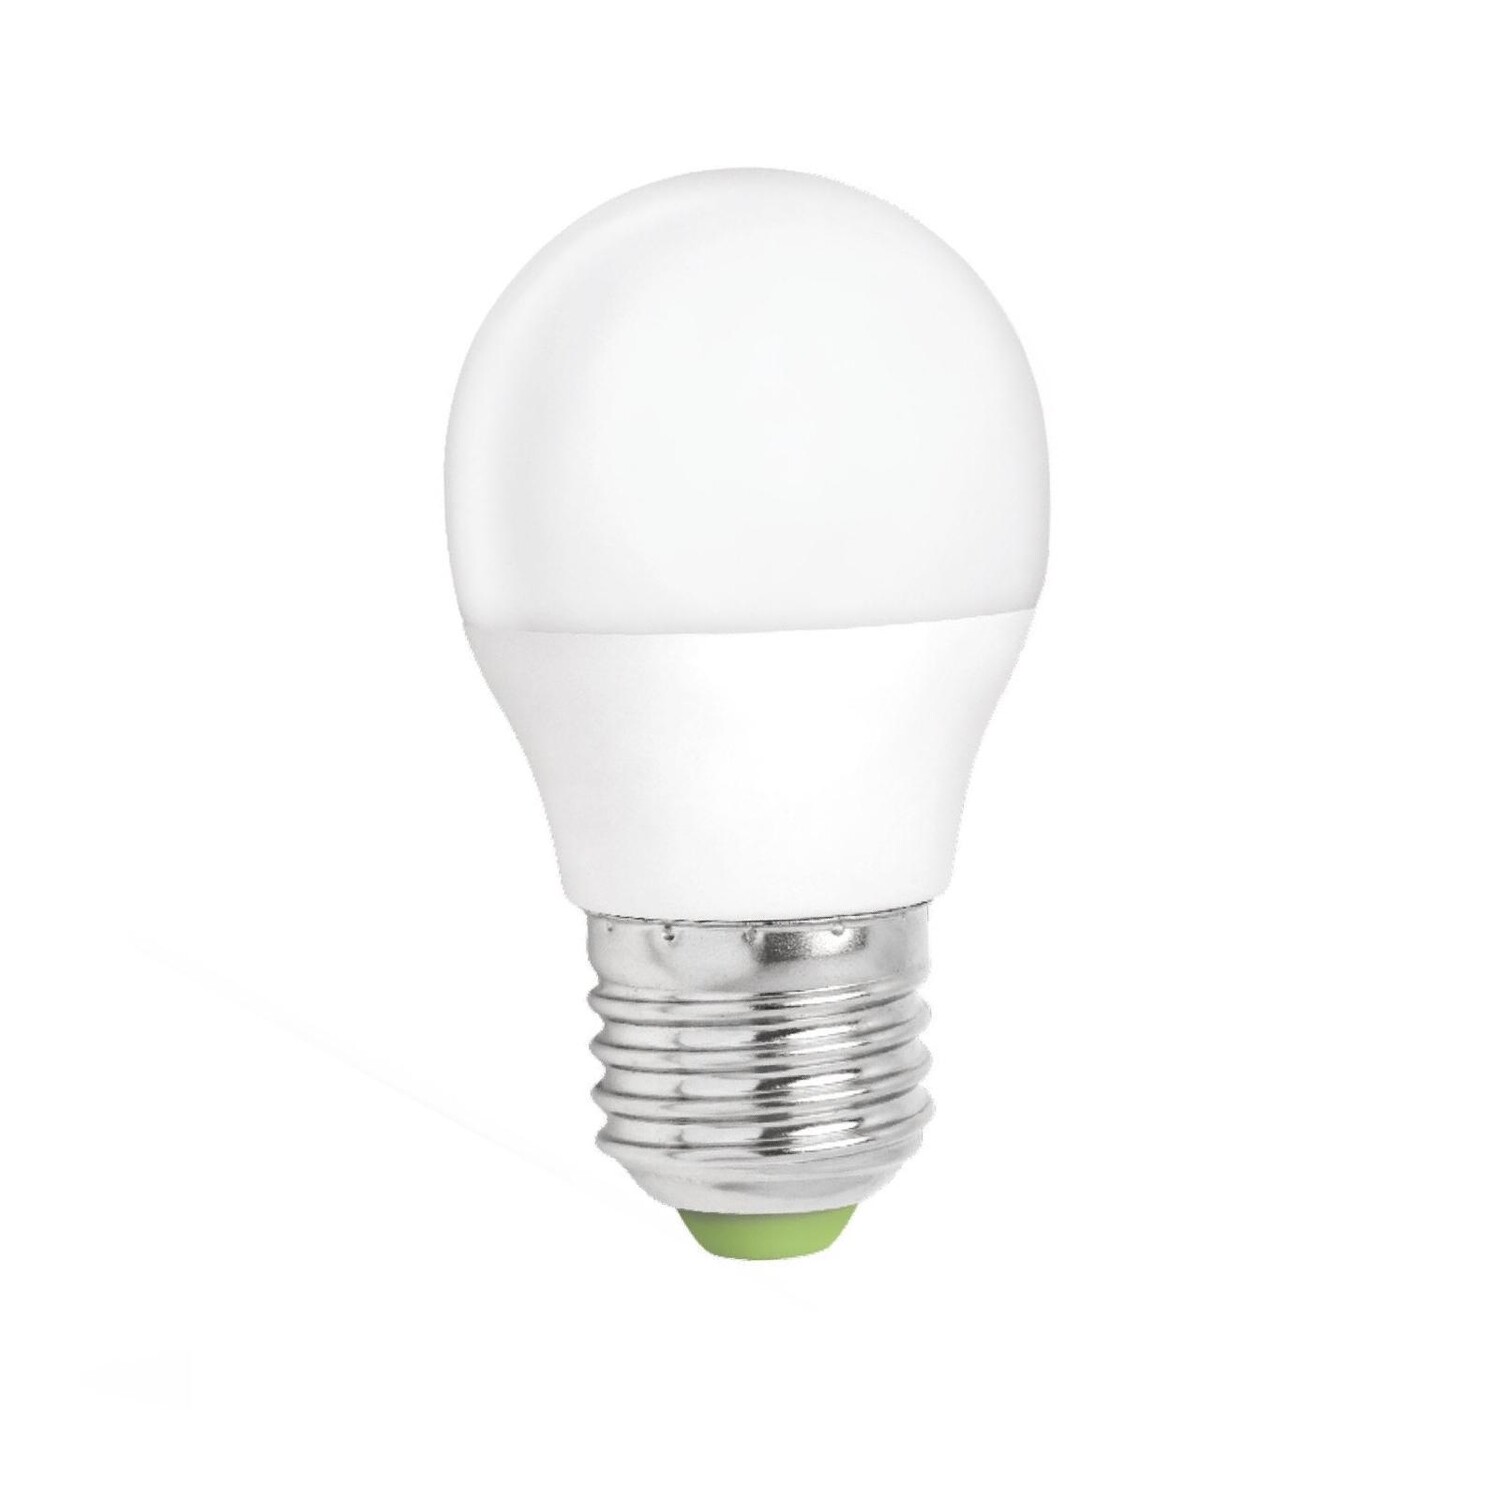 LED Lampe dimmbar - E27 Sockel - 5W entspricht 45W - Warmweiß 3000K